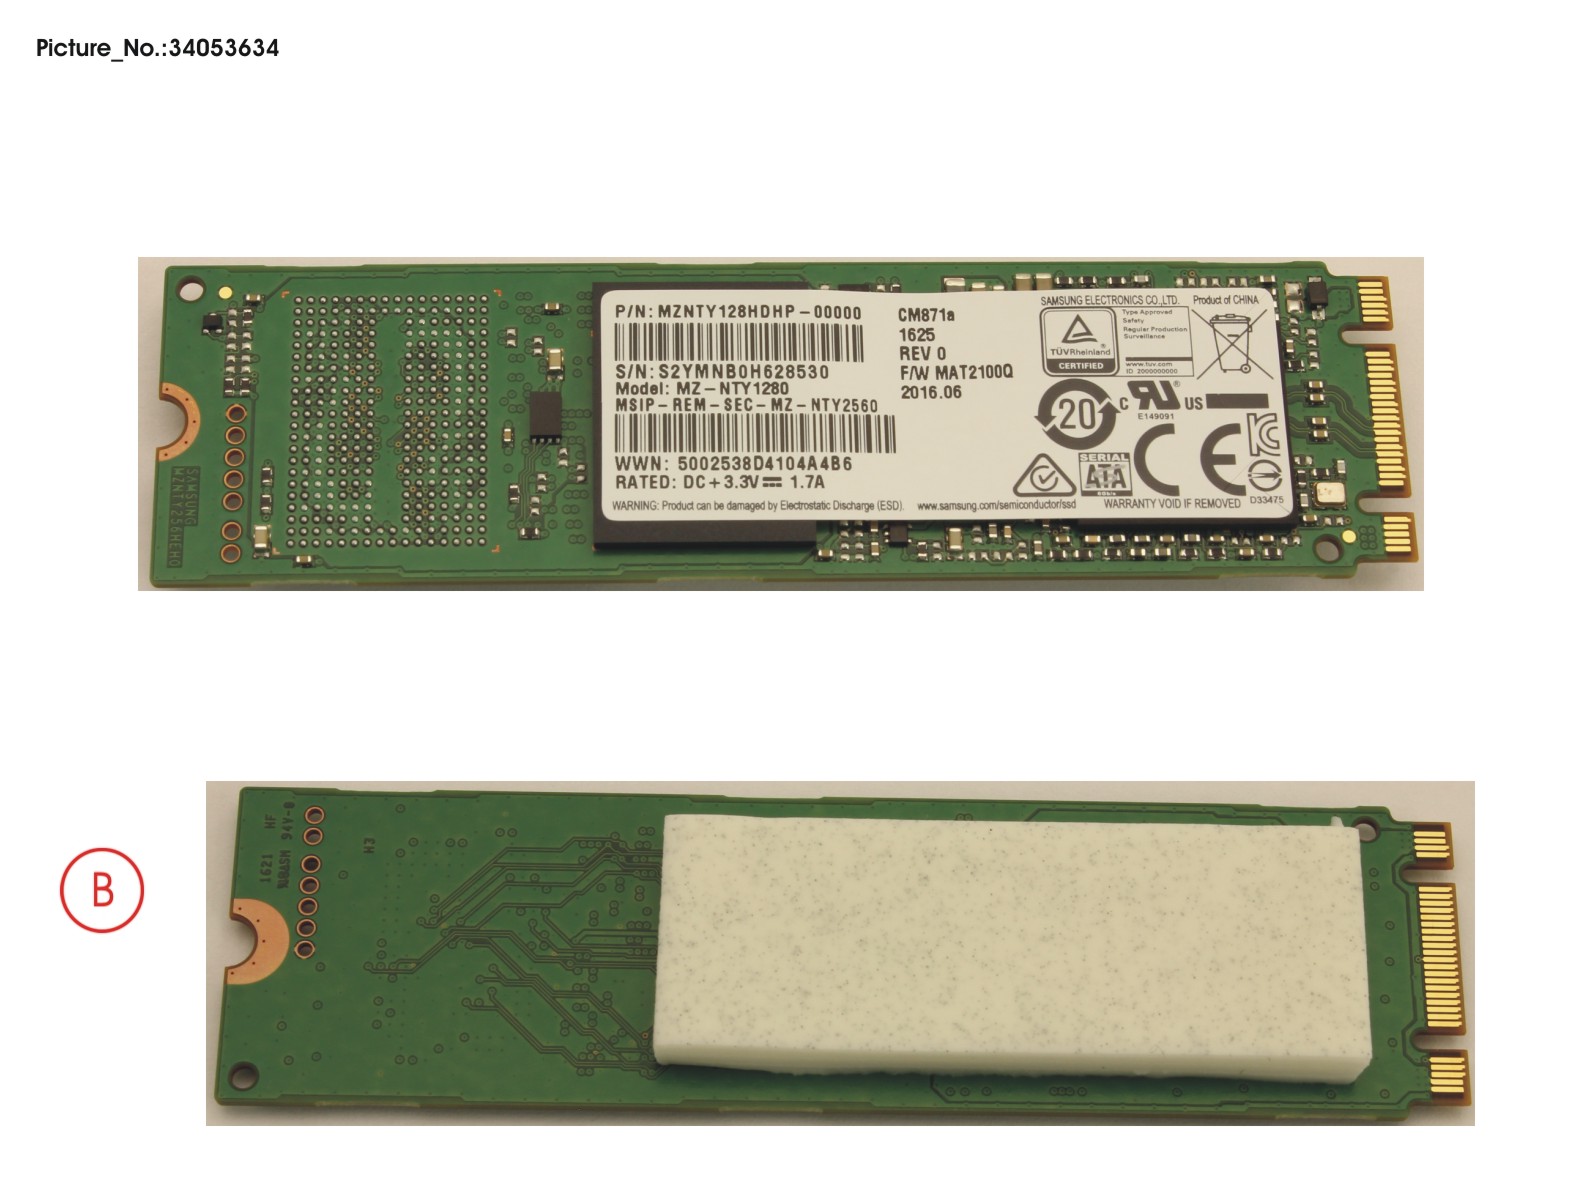 SSD S3 M.2 2280 128GB W/RUBBER